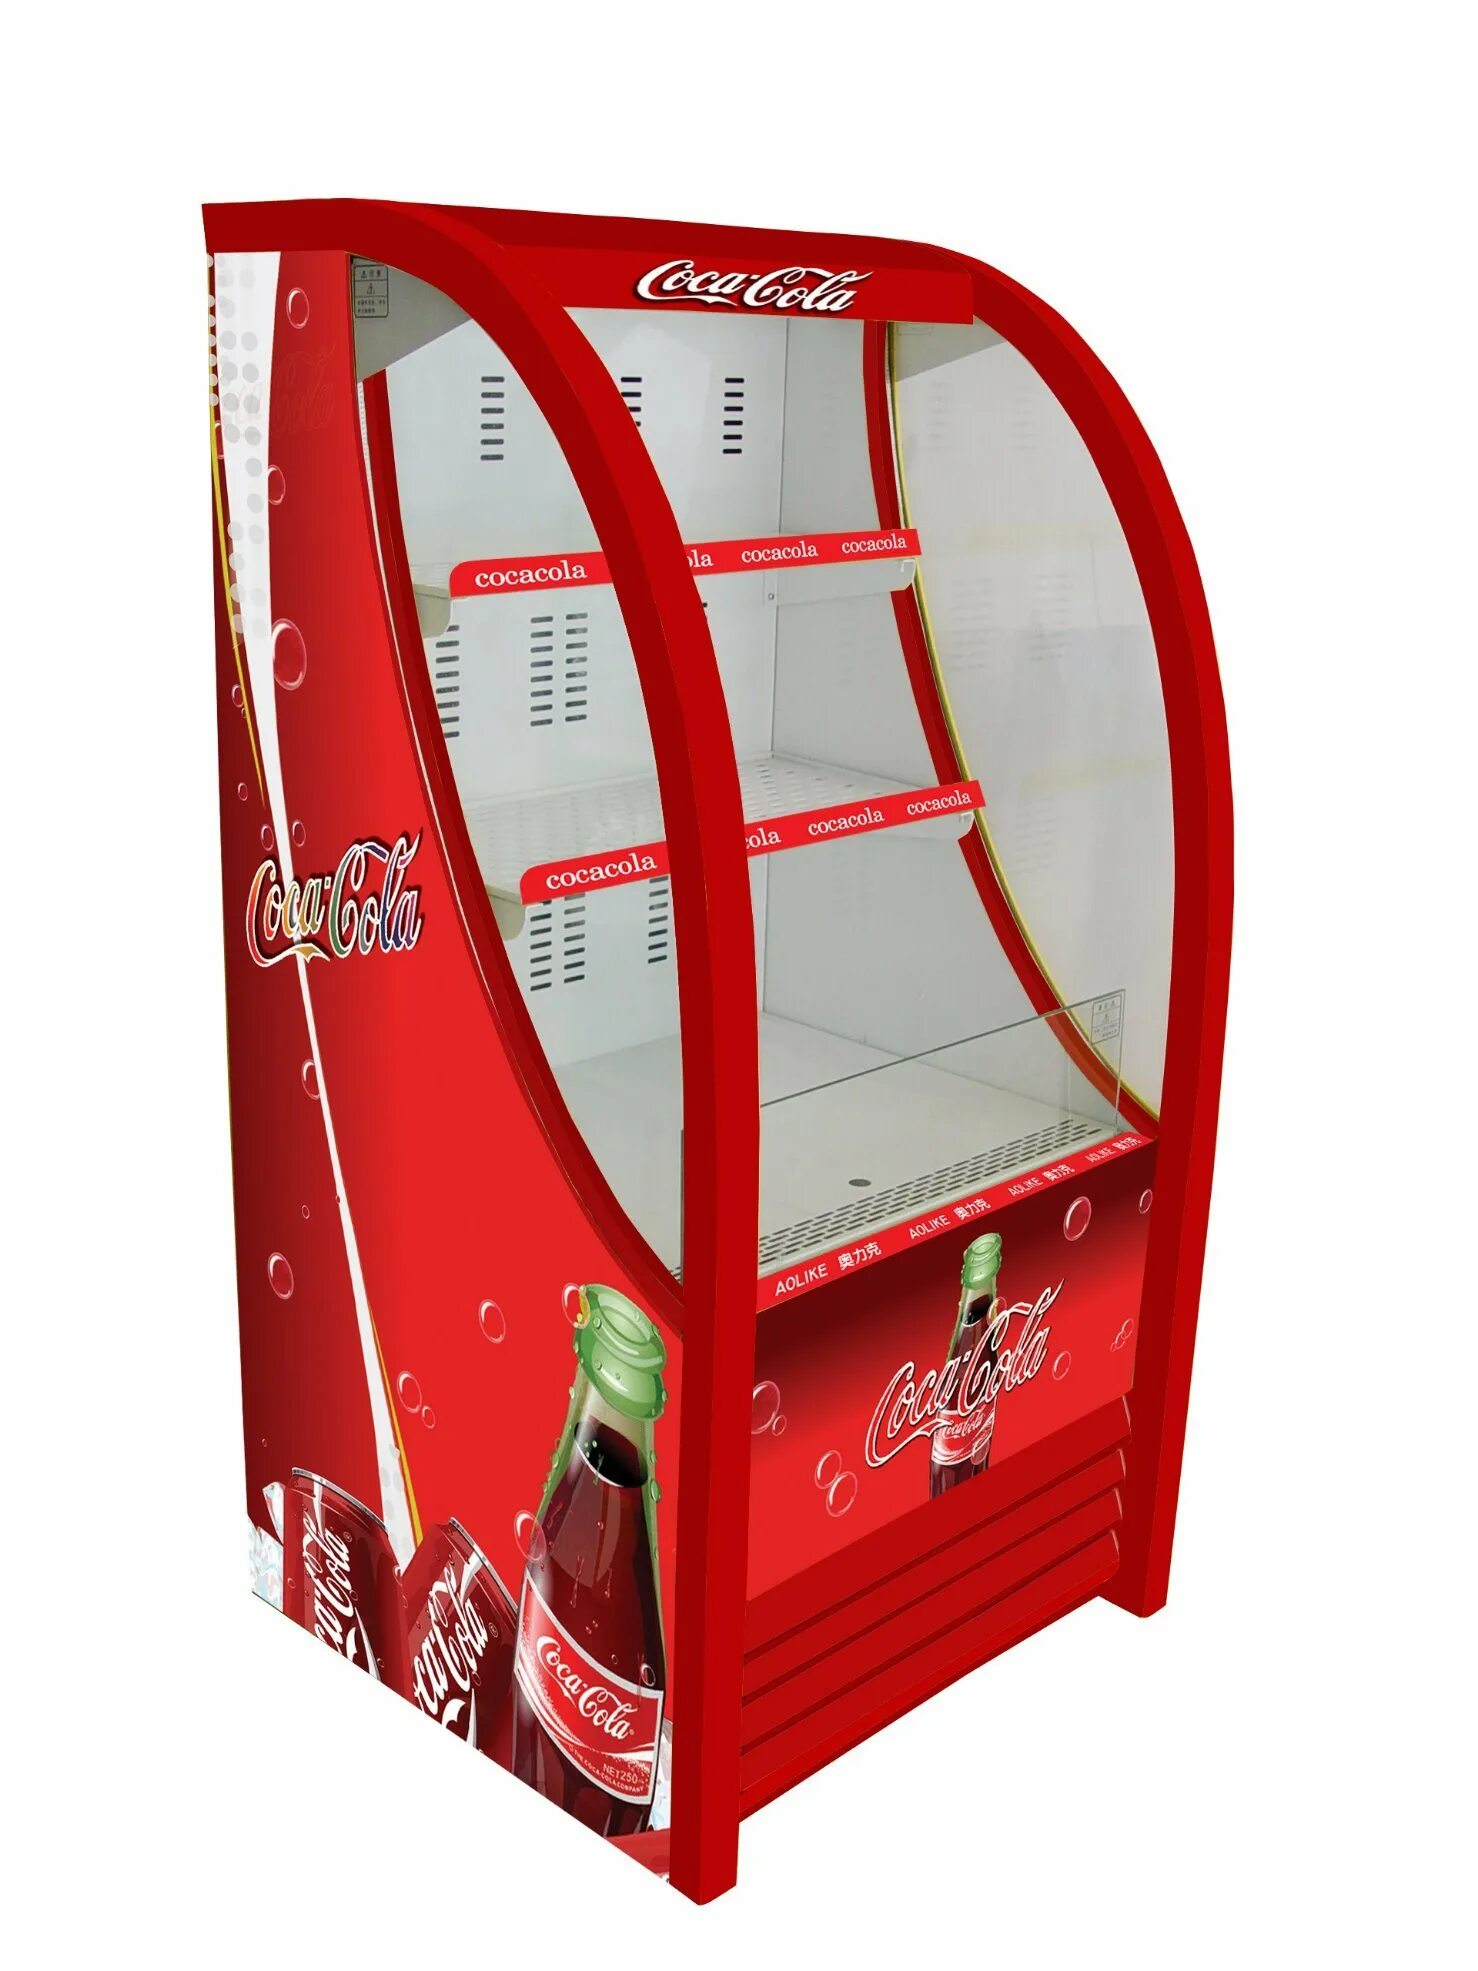 Холодильник витрина Coca-Cola pf32. Витрина для напитков. Открытый холодильник для напитков. Напитки прохладительные на витрине. Прилавок для напитков